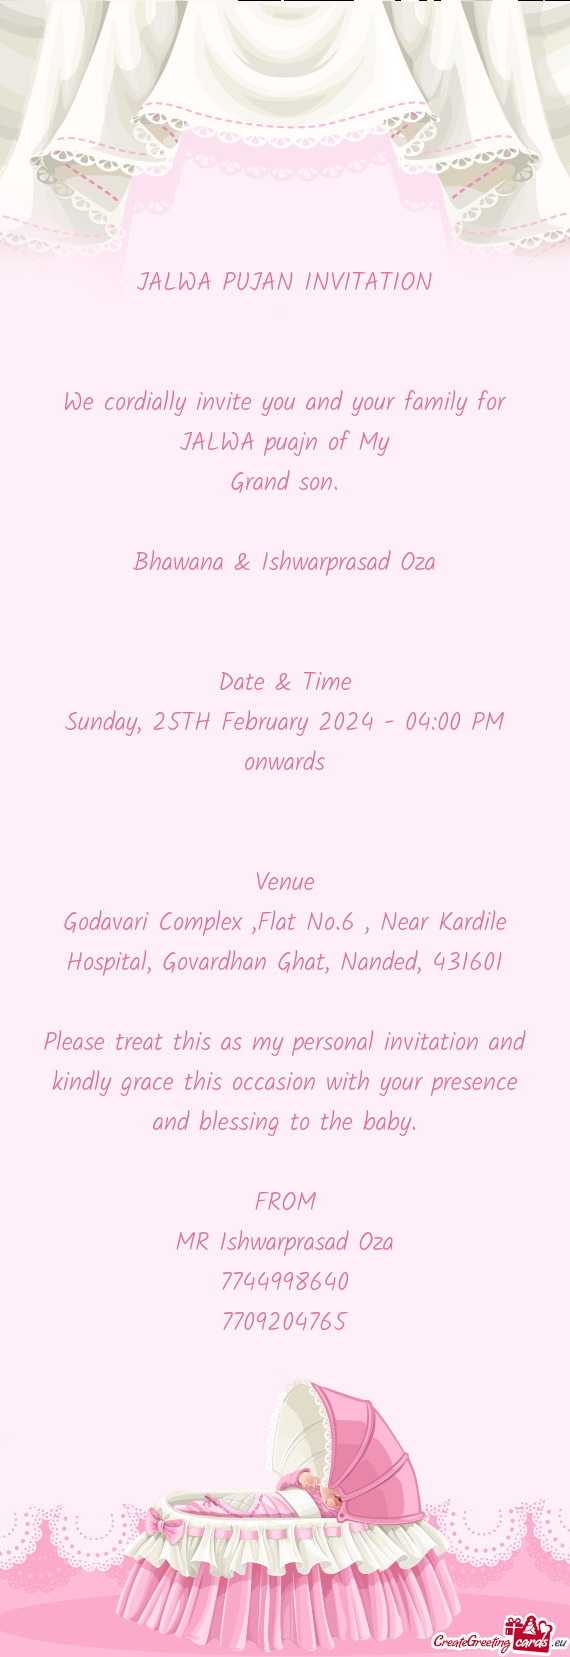 Godavari Complex ,Flat No.6 , Near Kardile Hospital, Govardhan Ghat, Nanded, 431601